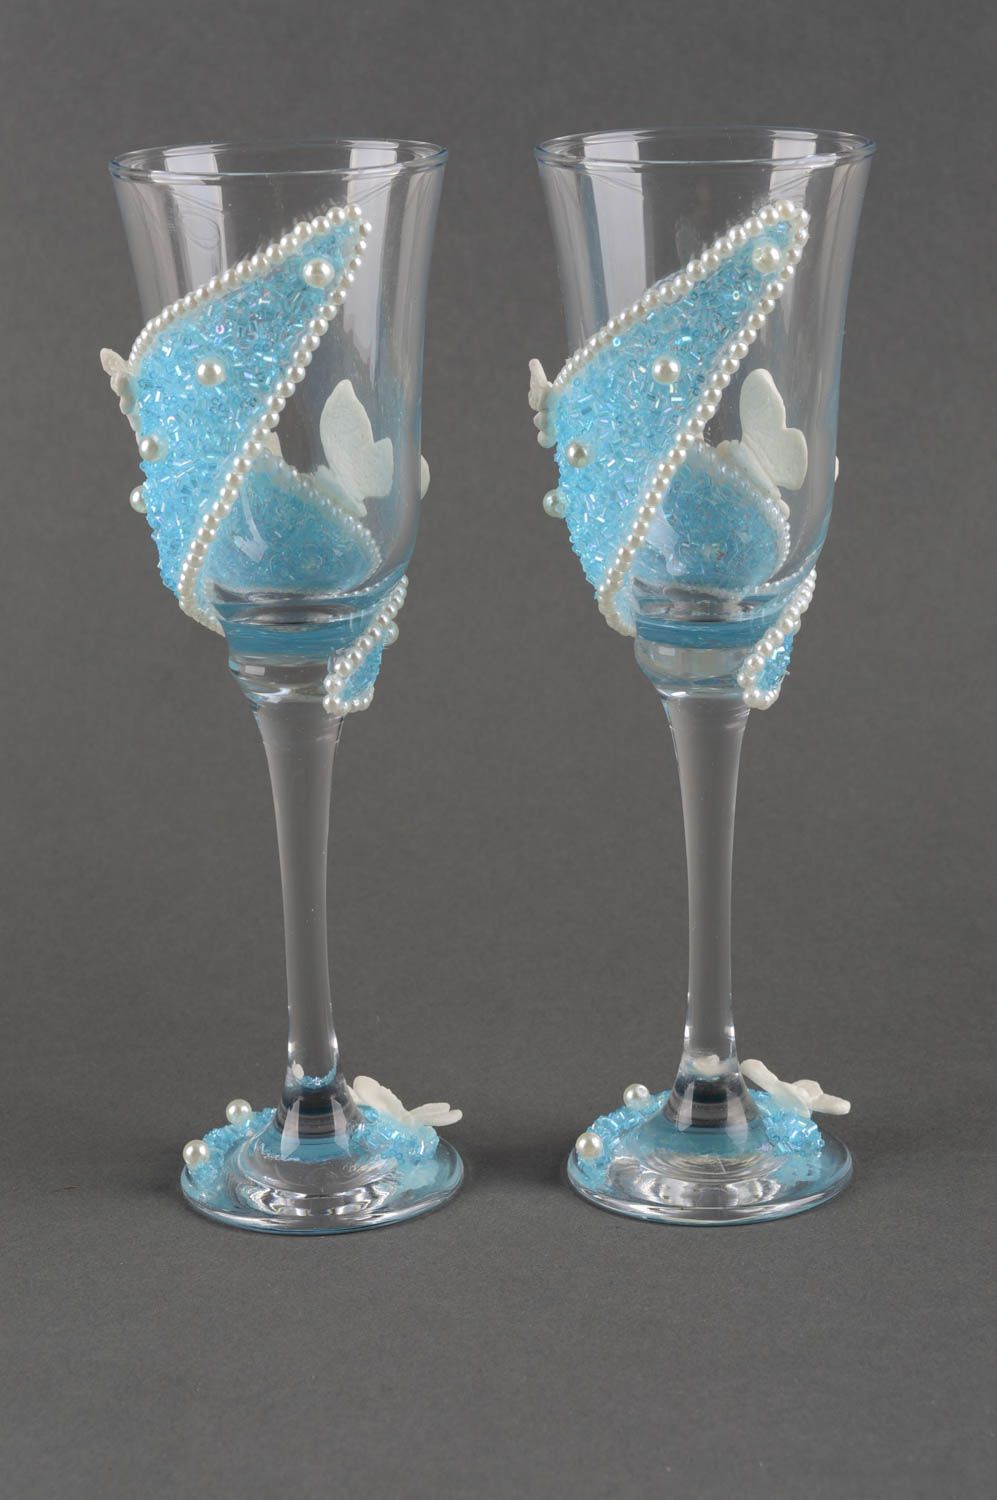 Beautiful handmade wedding glasses wine glass types wedding accessories photo 3